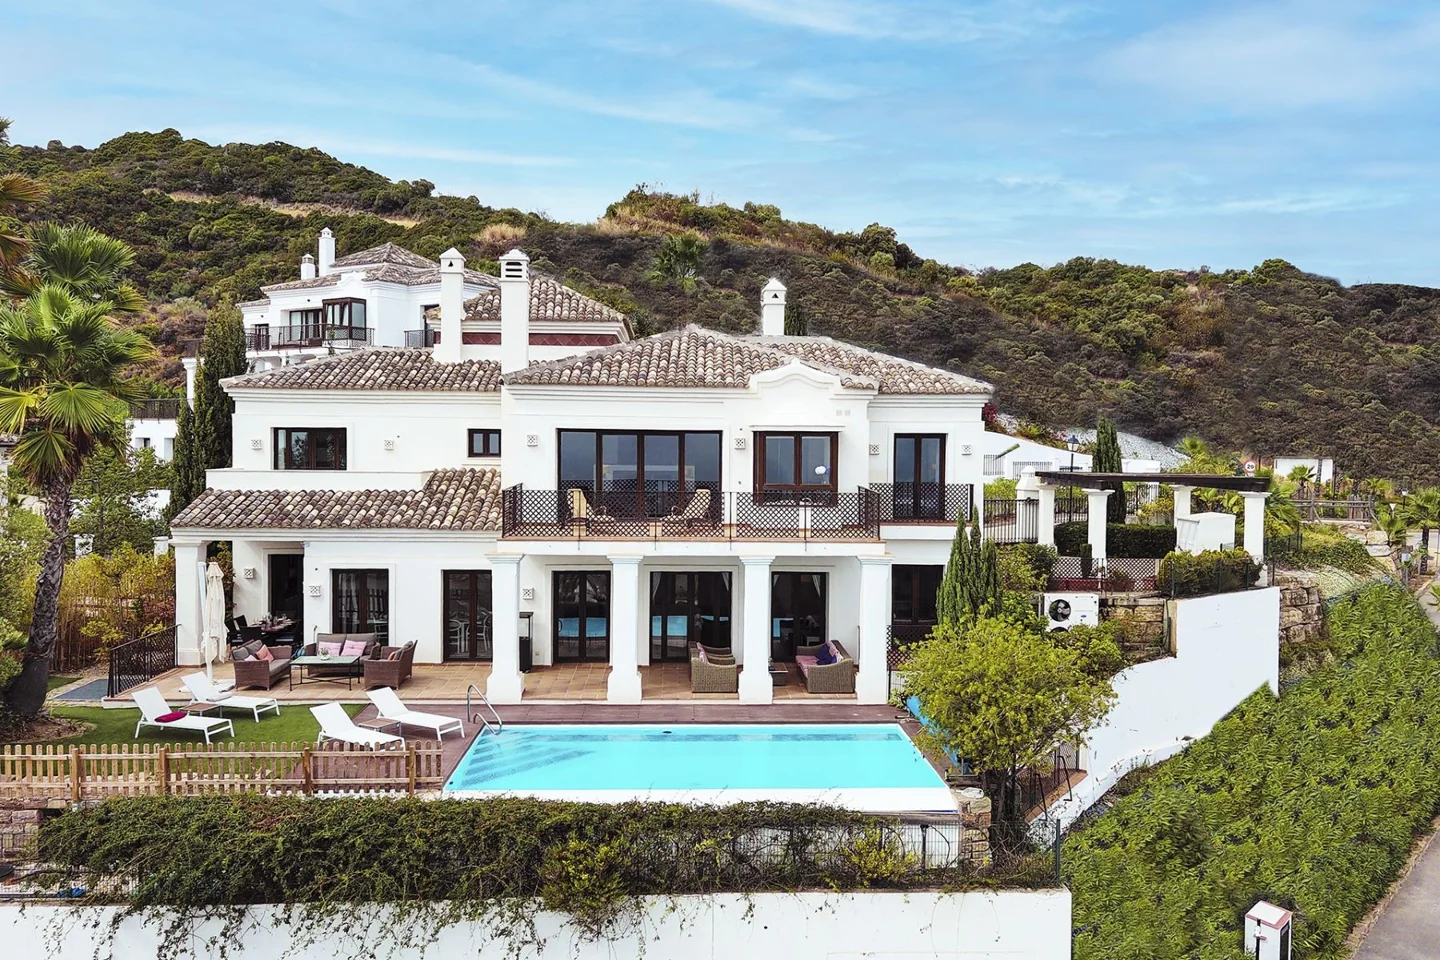 Benahavis Town: Mediterranean style villa with incredible panoramic views